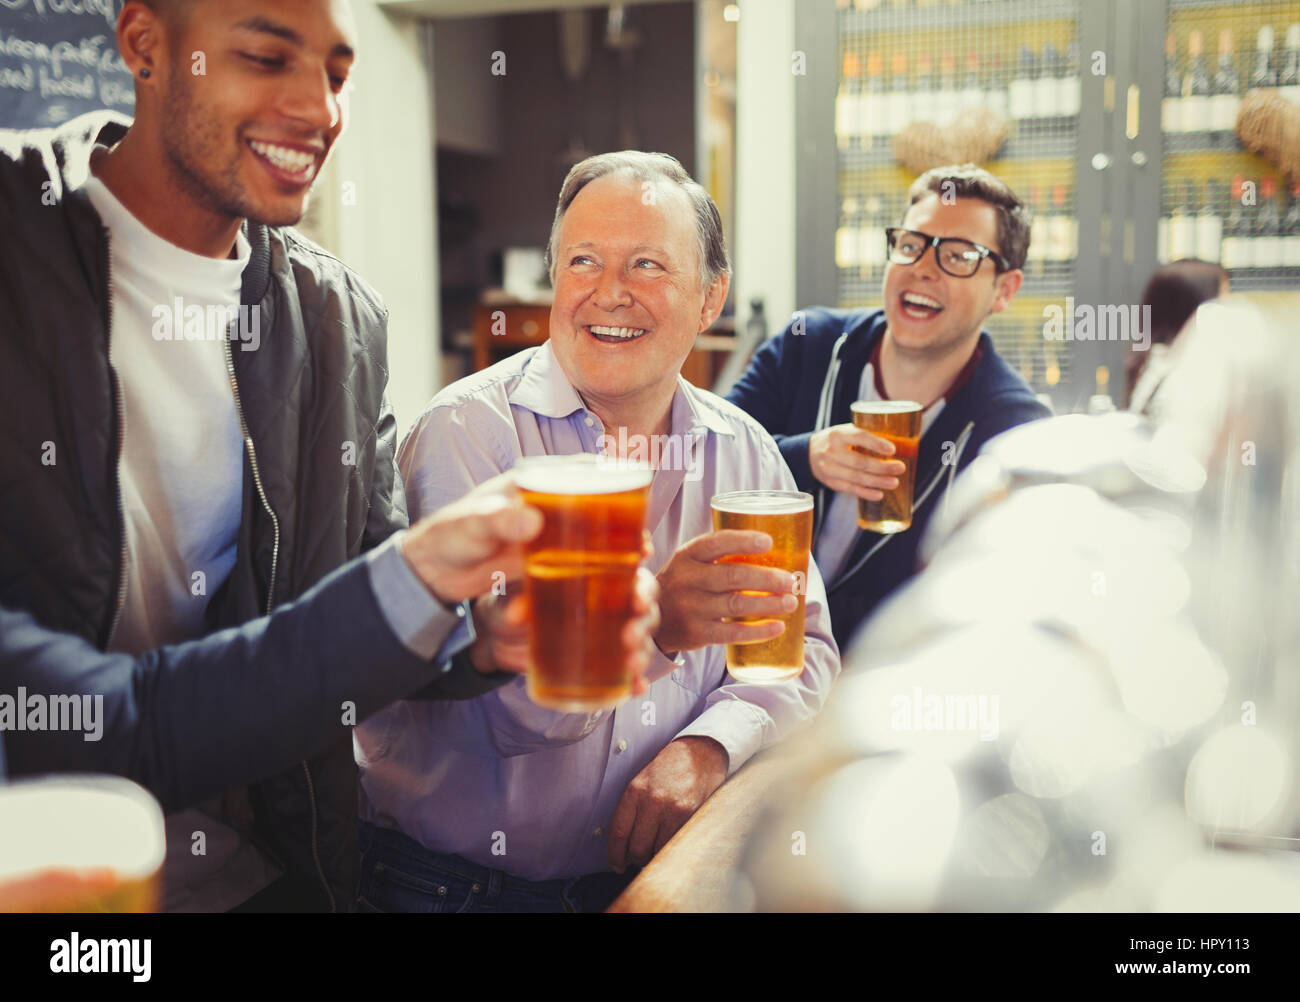 Smiling men friends toasting beer glasses at bar Stock Photo